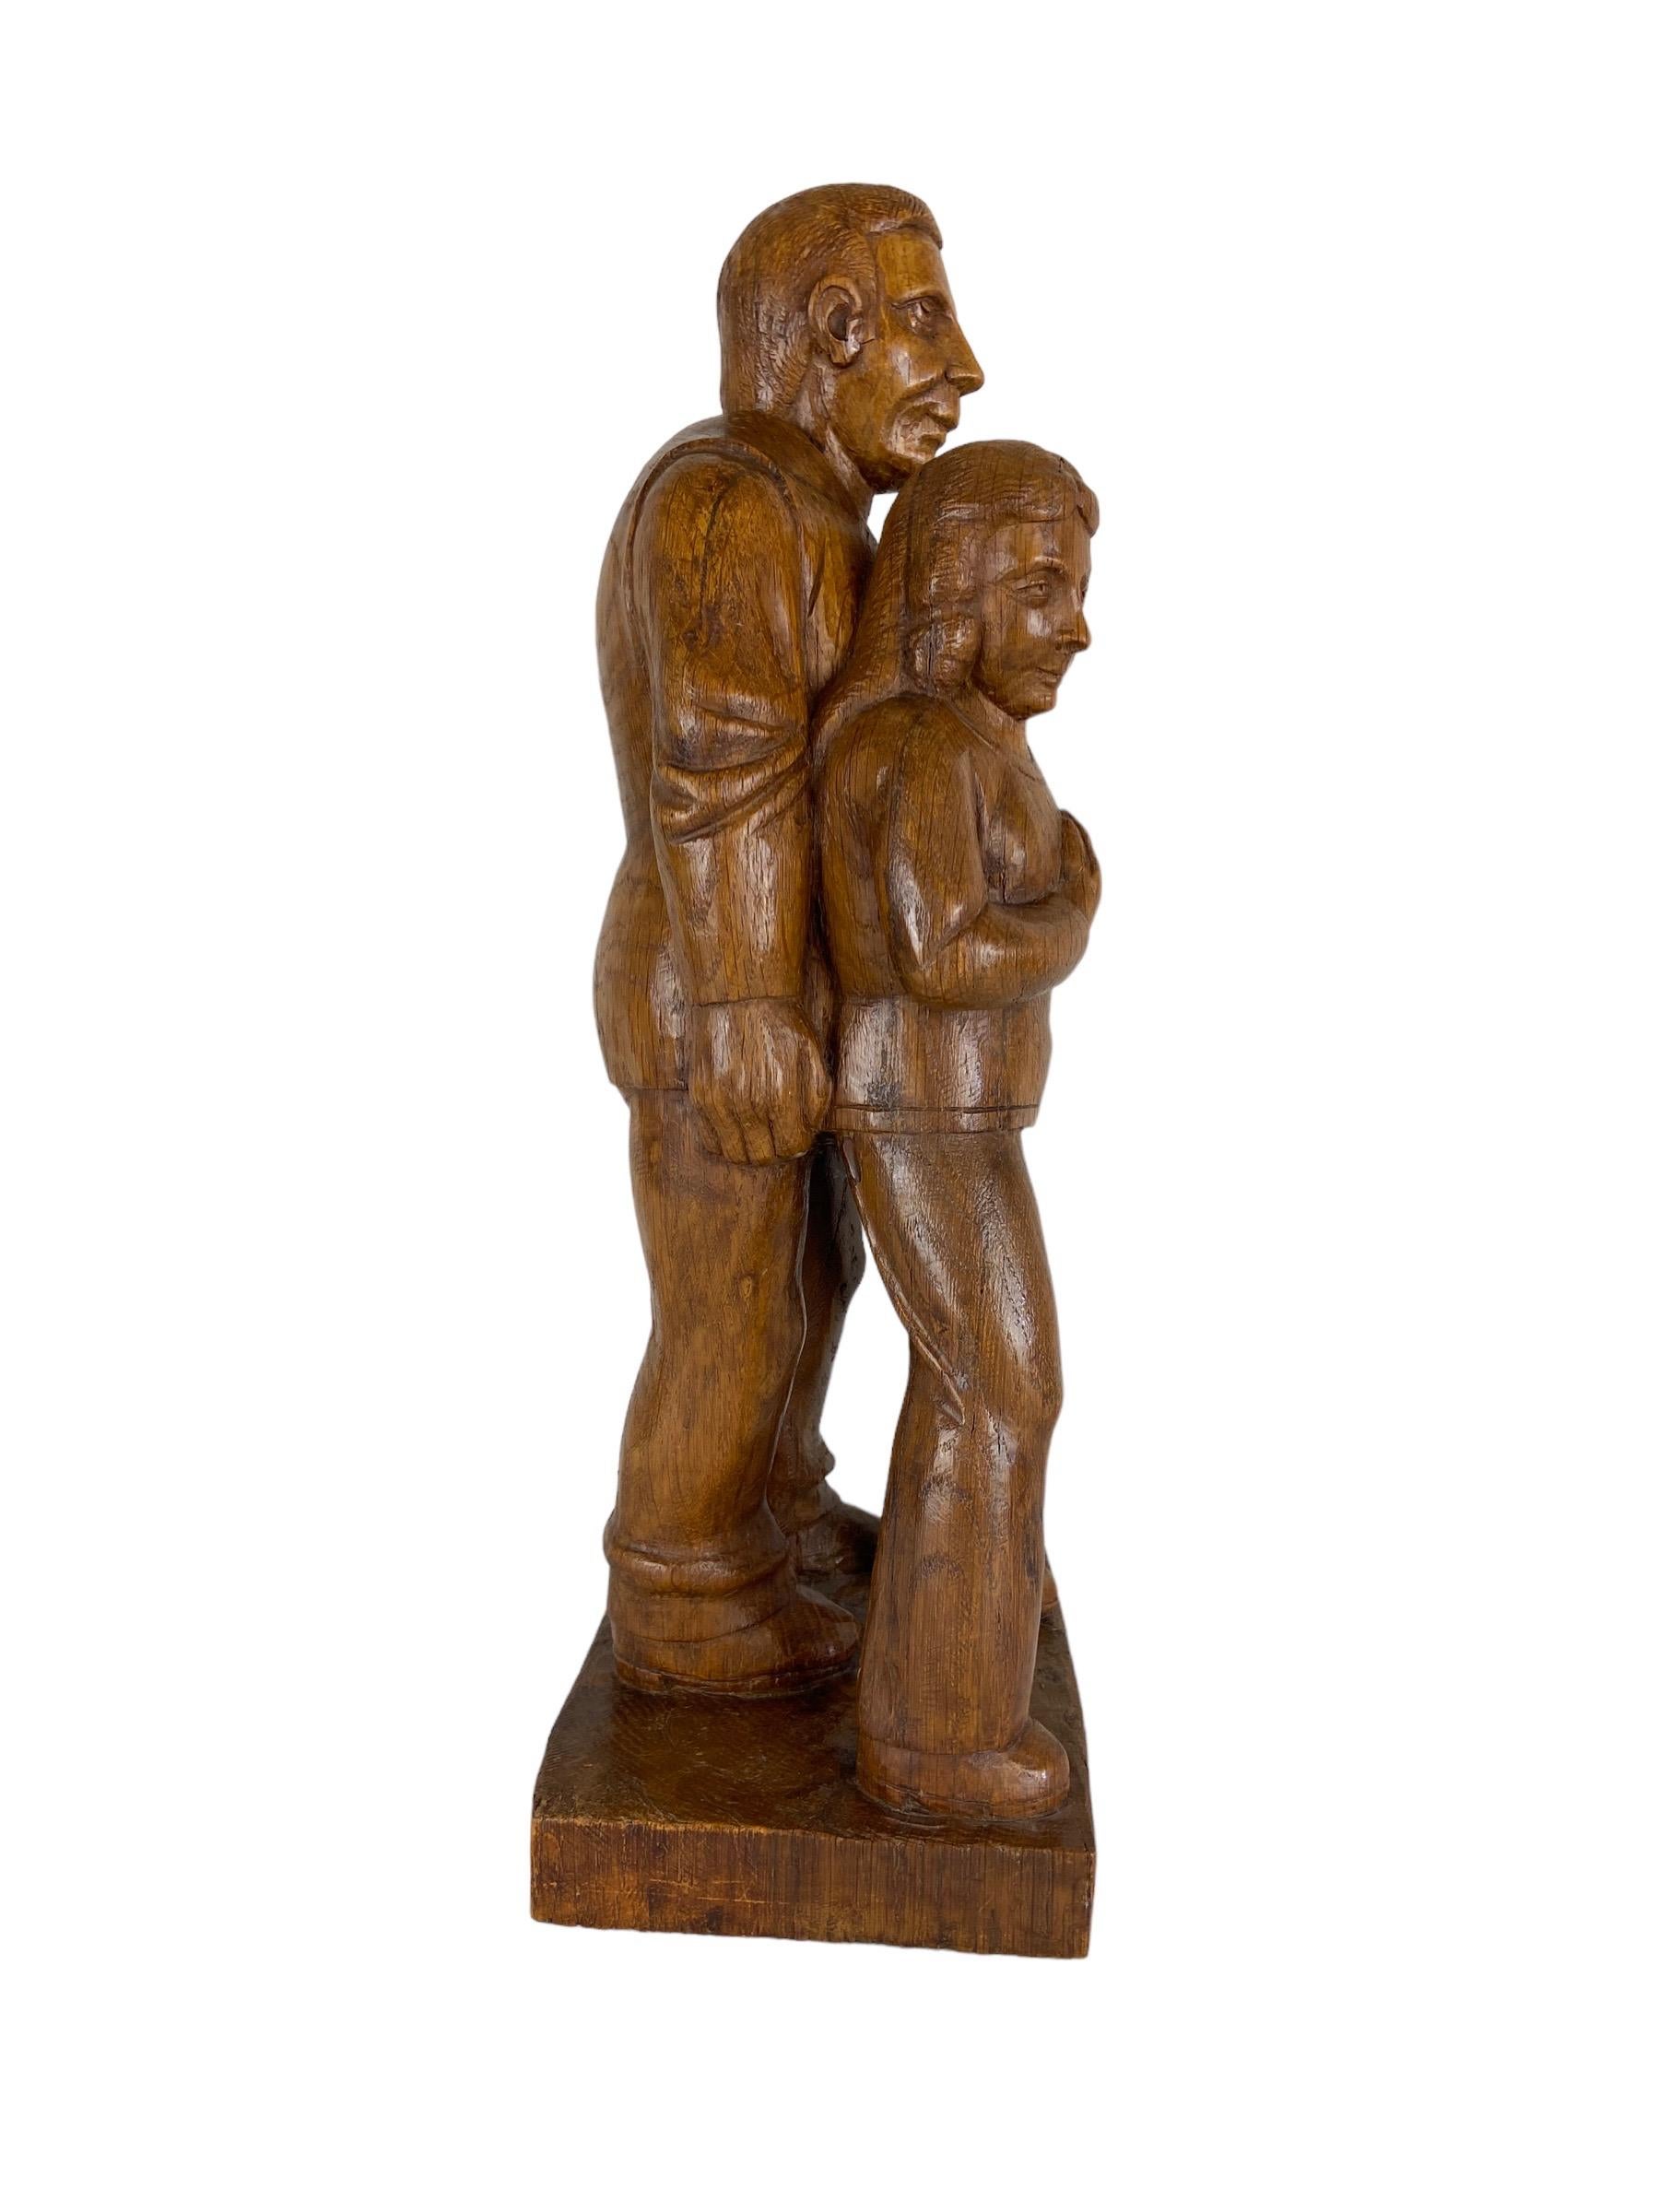 Wooden sculpture signed “G.G. Ysen”. Rare piece of art from The Netherlands.

Height 45 cm width 19 cm depth 13 cm.